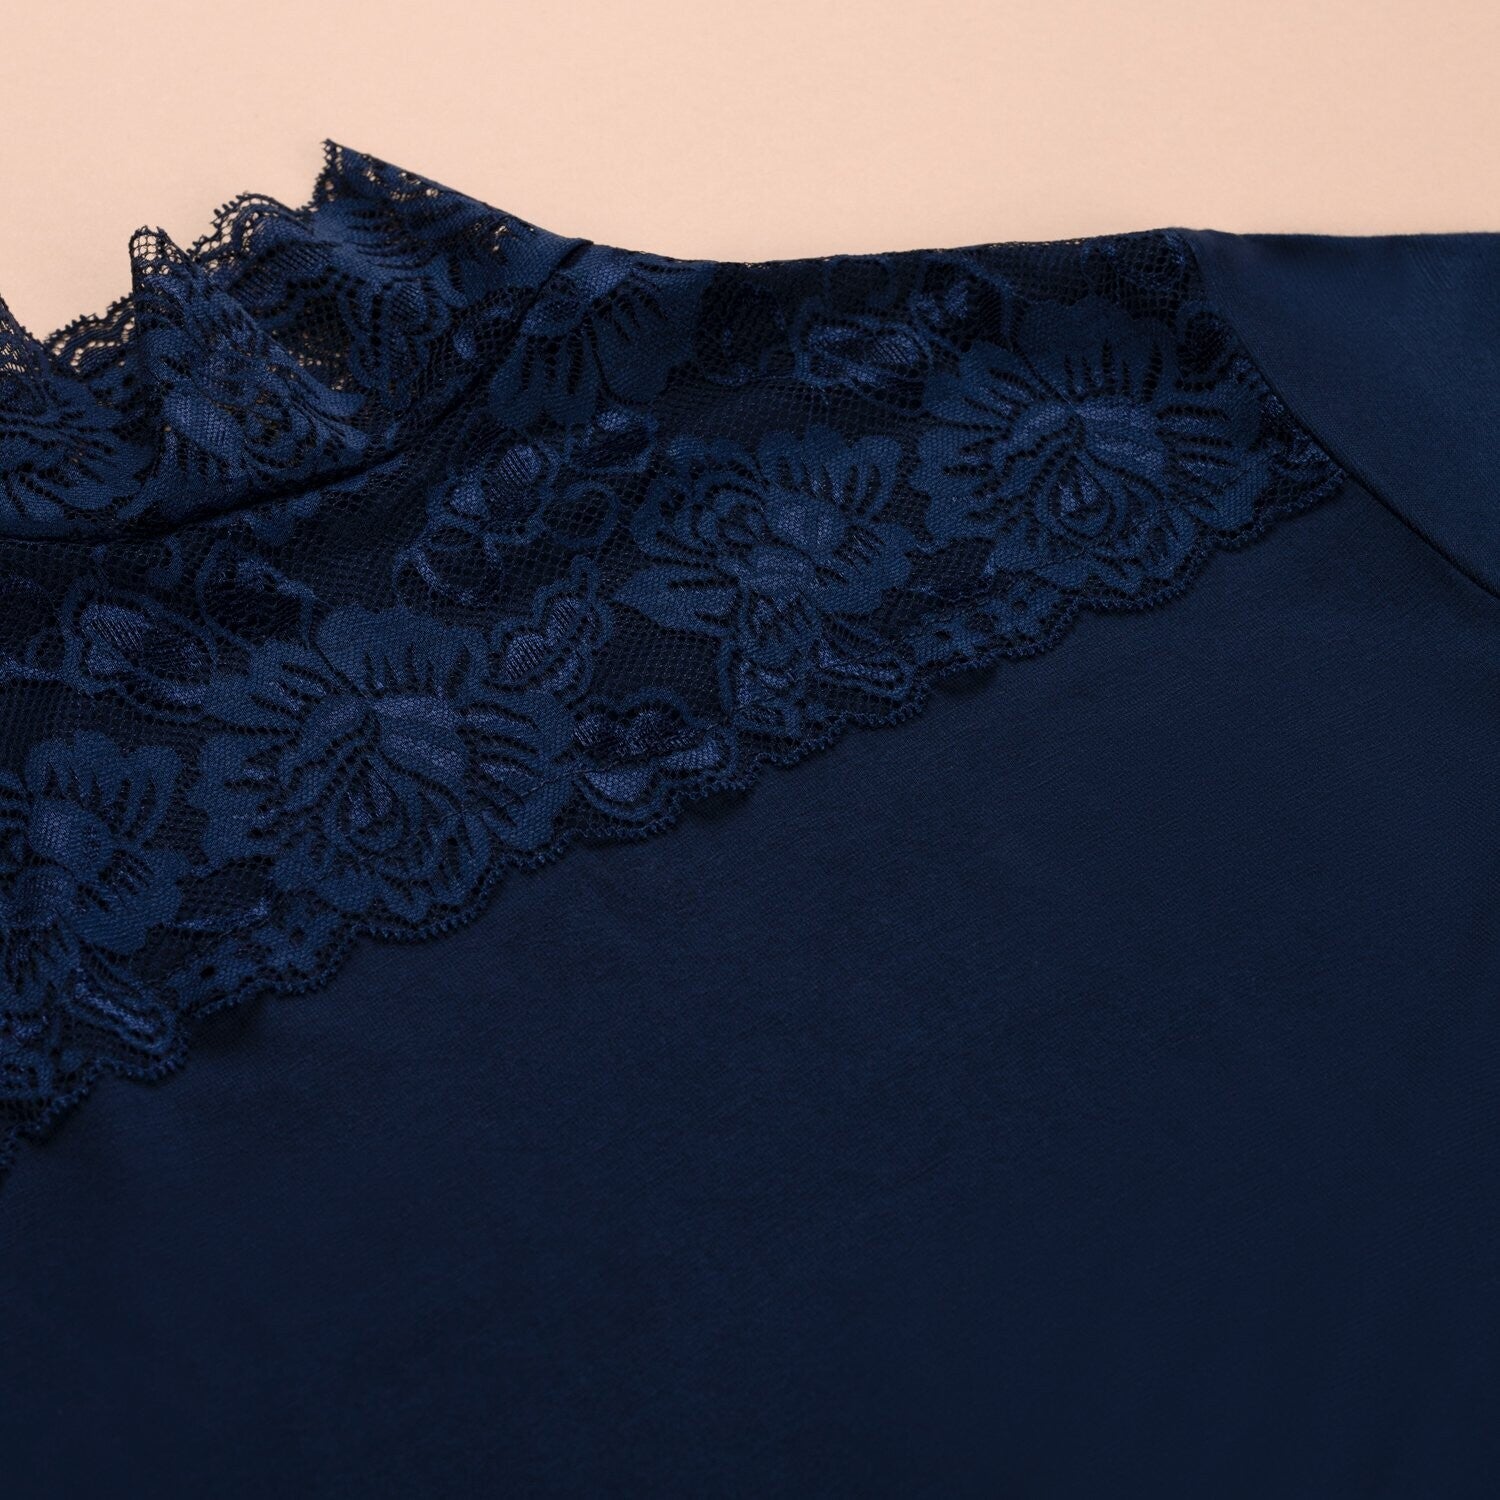 HANNAH - Long sleeve undertop with turtleneck & floral lace details